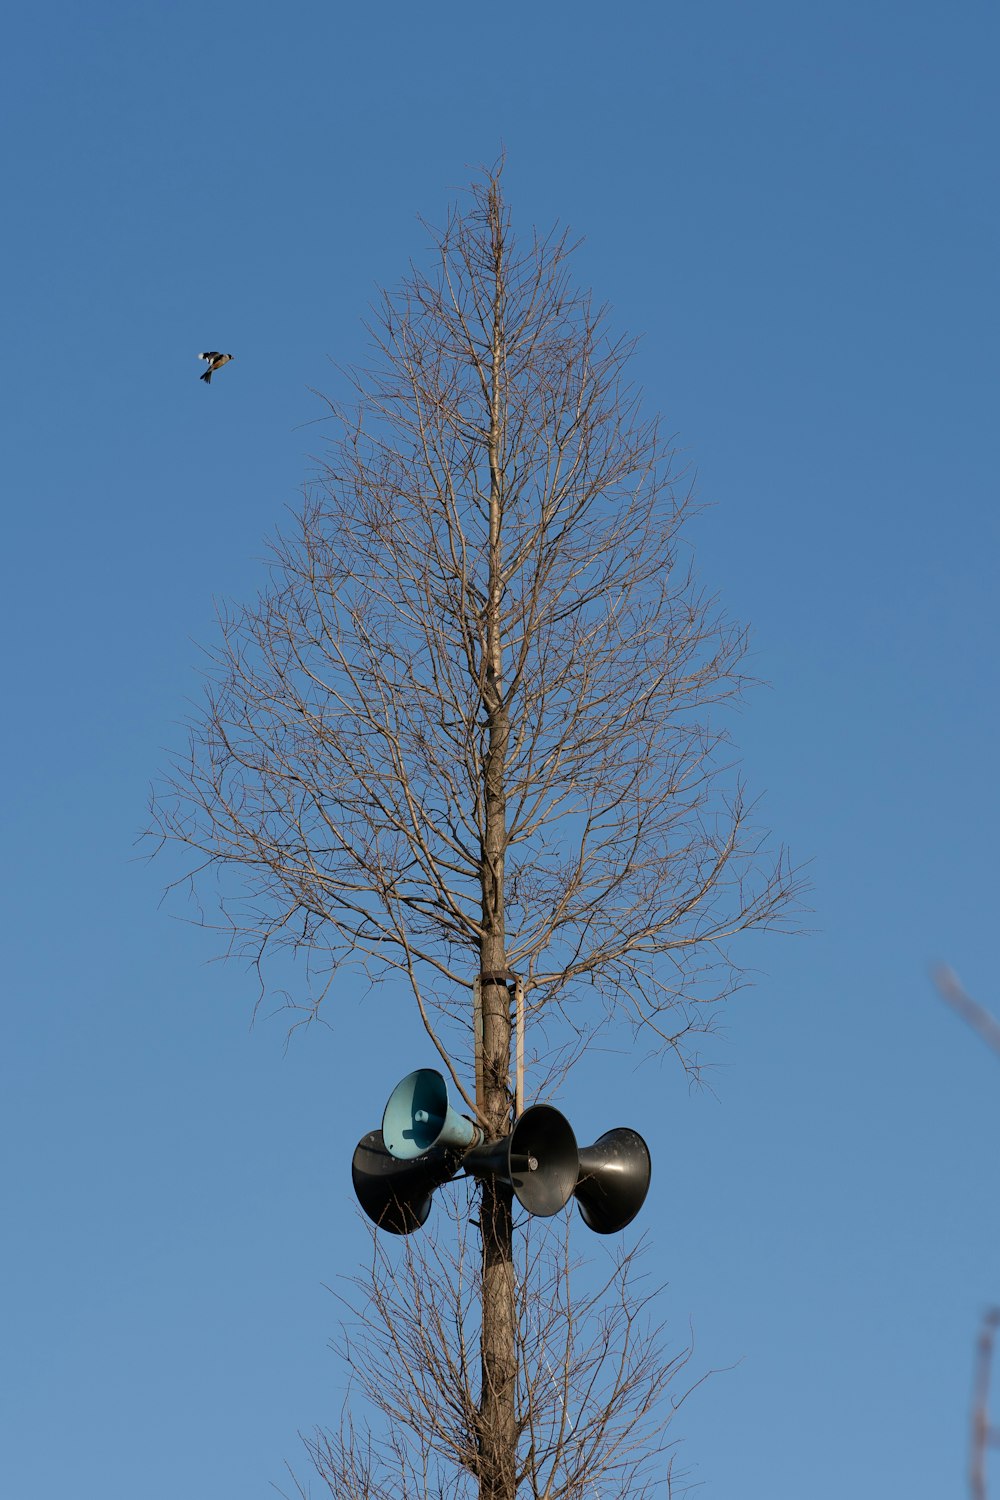 a traffic light on a pole next to a tree